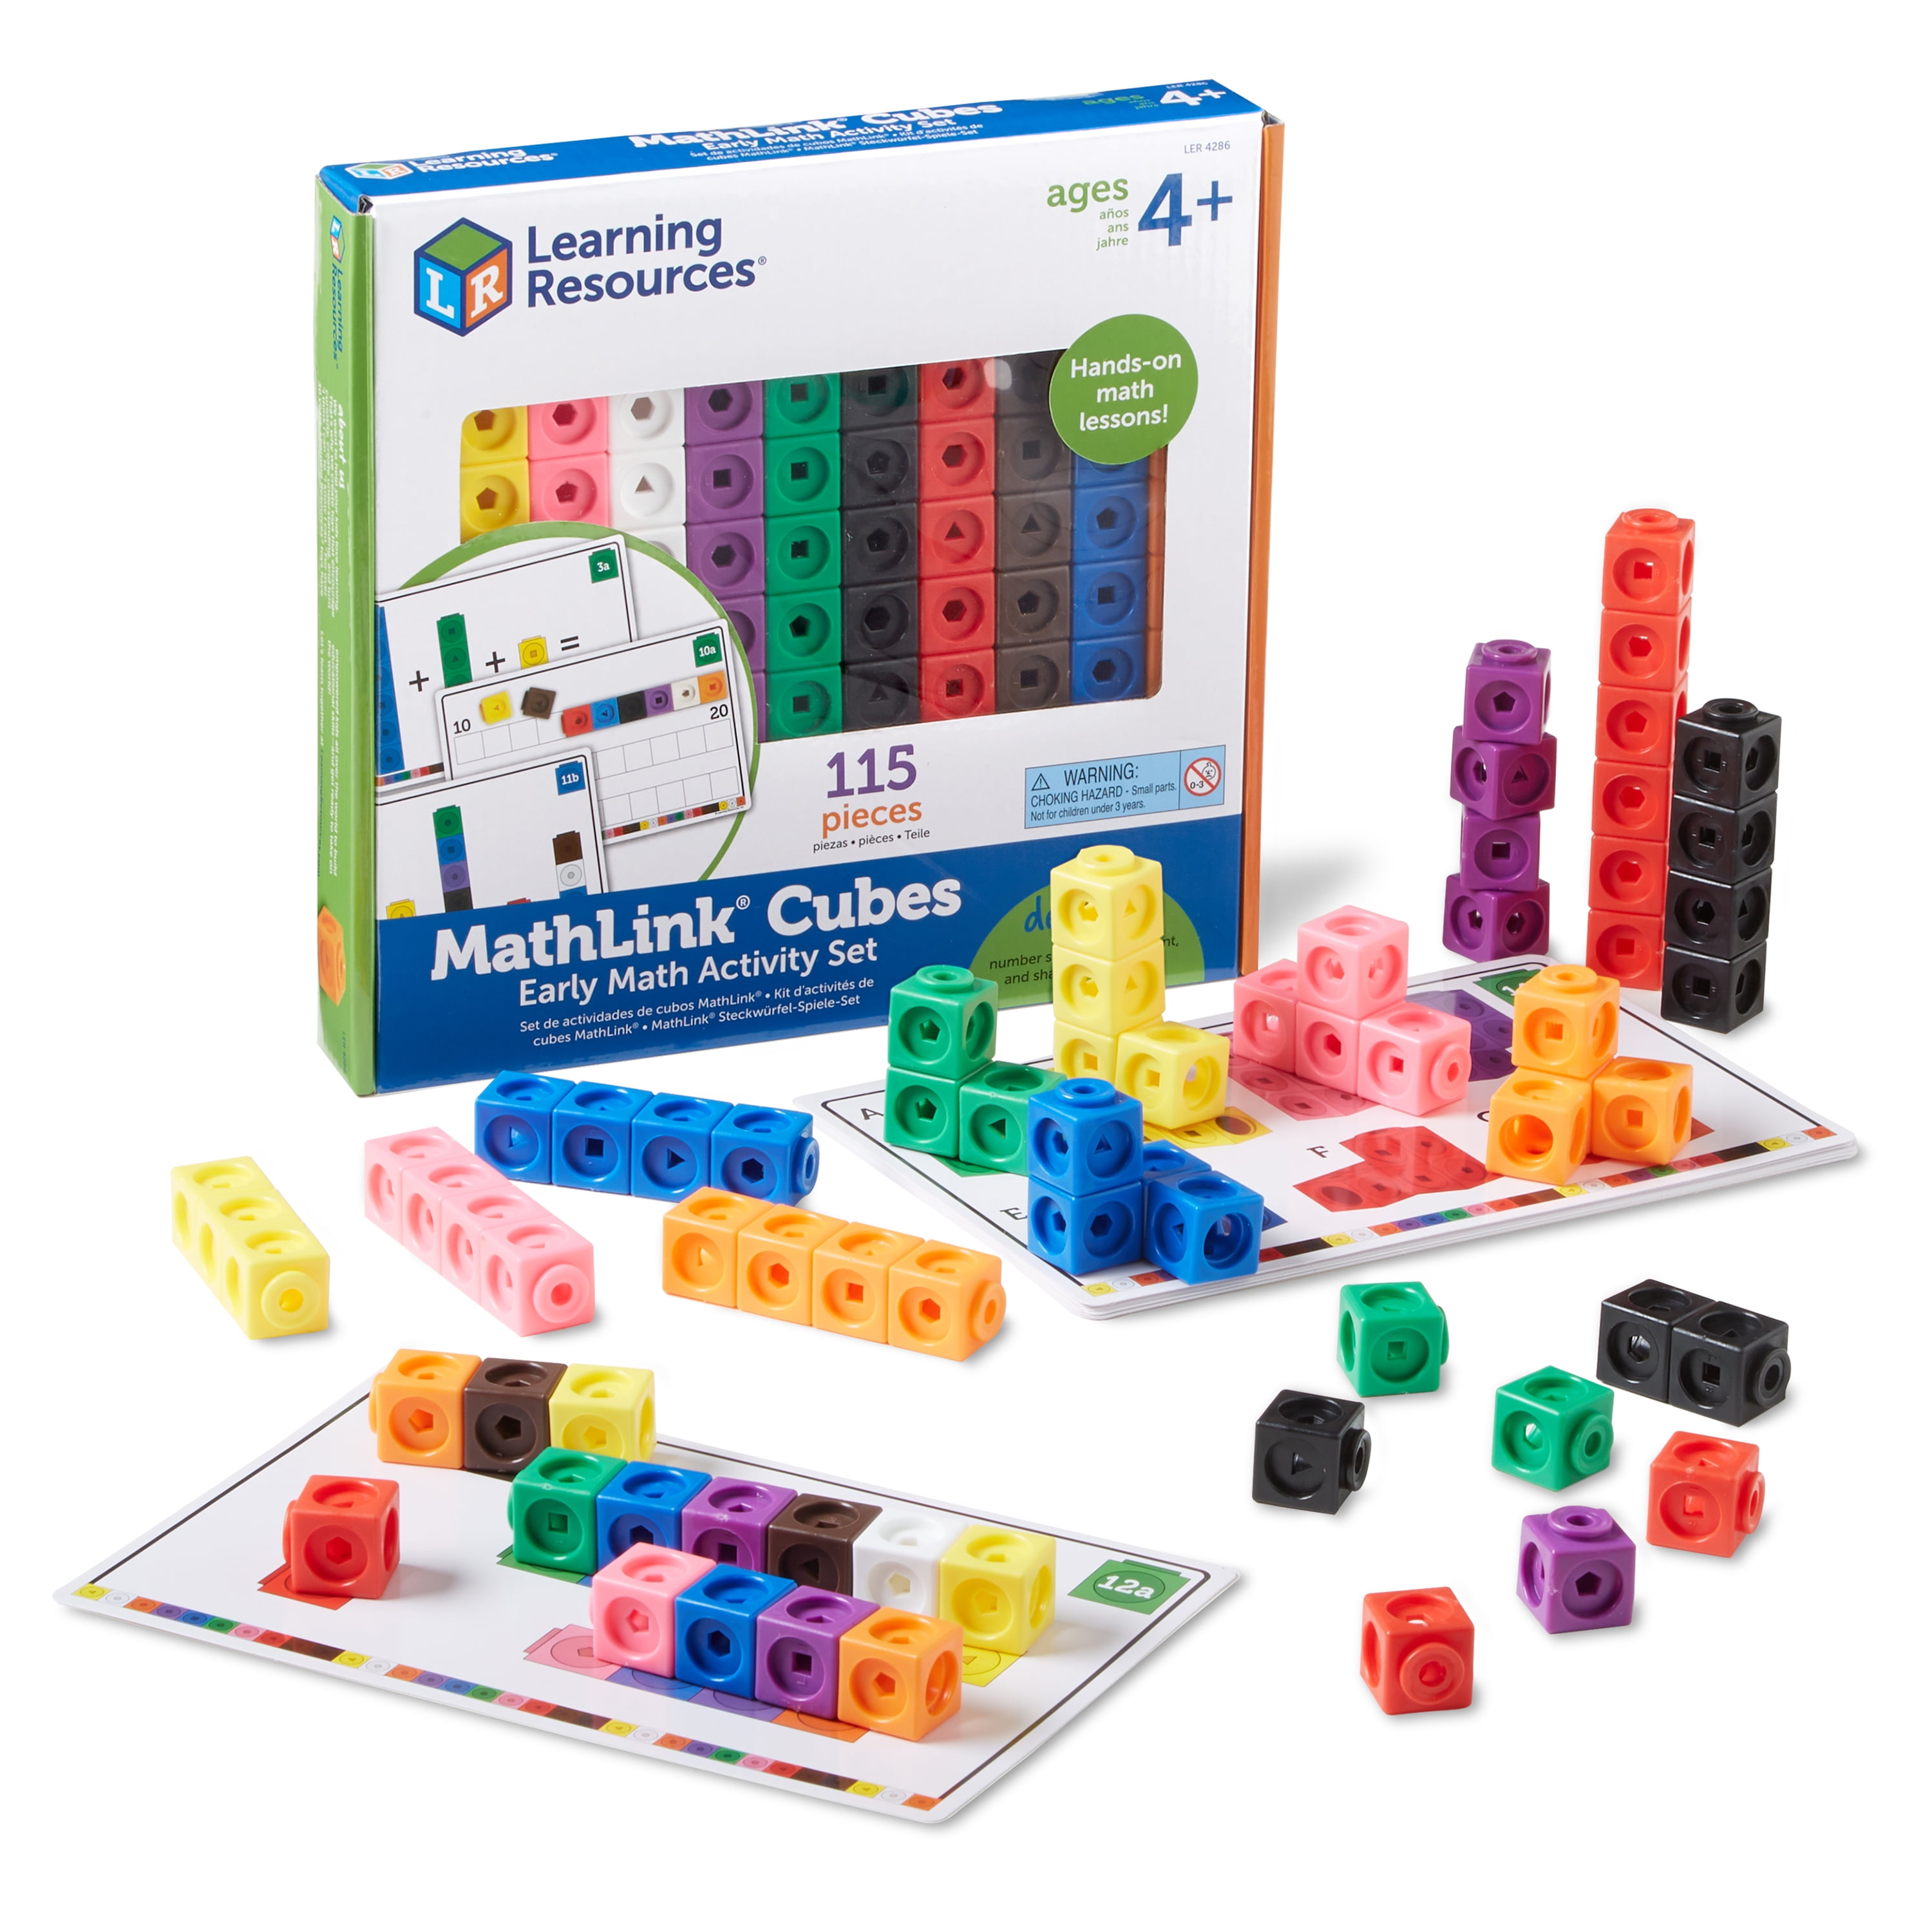 200 Snap Cubes Mathlink Interlocking Blocks Math Manipulative Learning Resources 